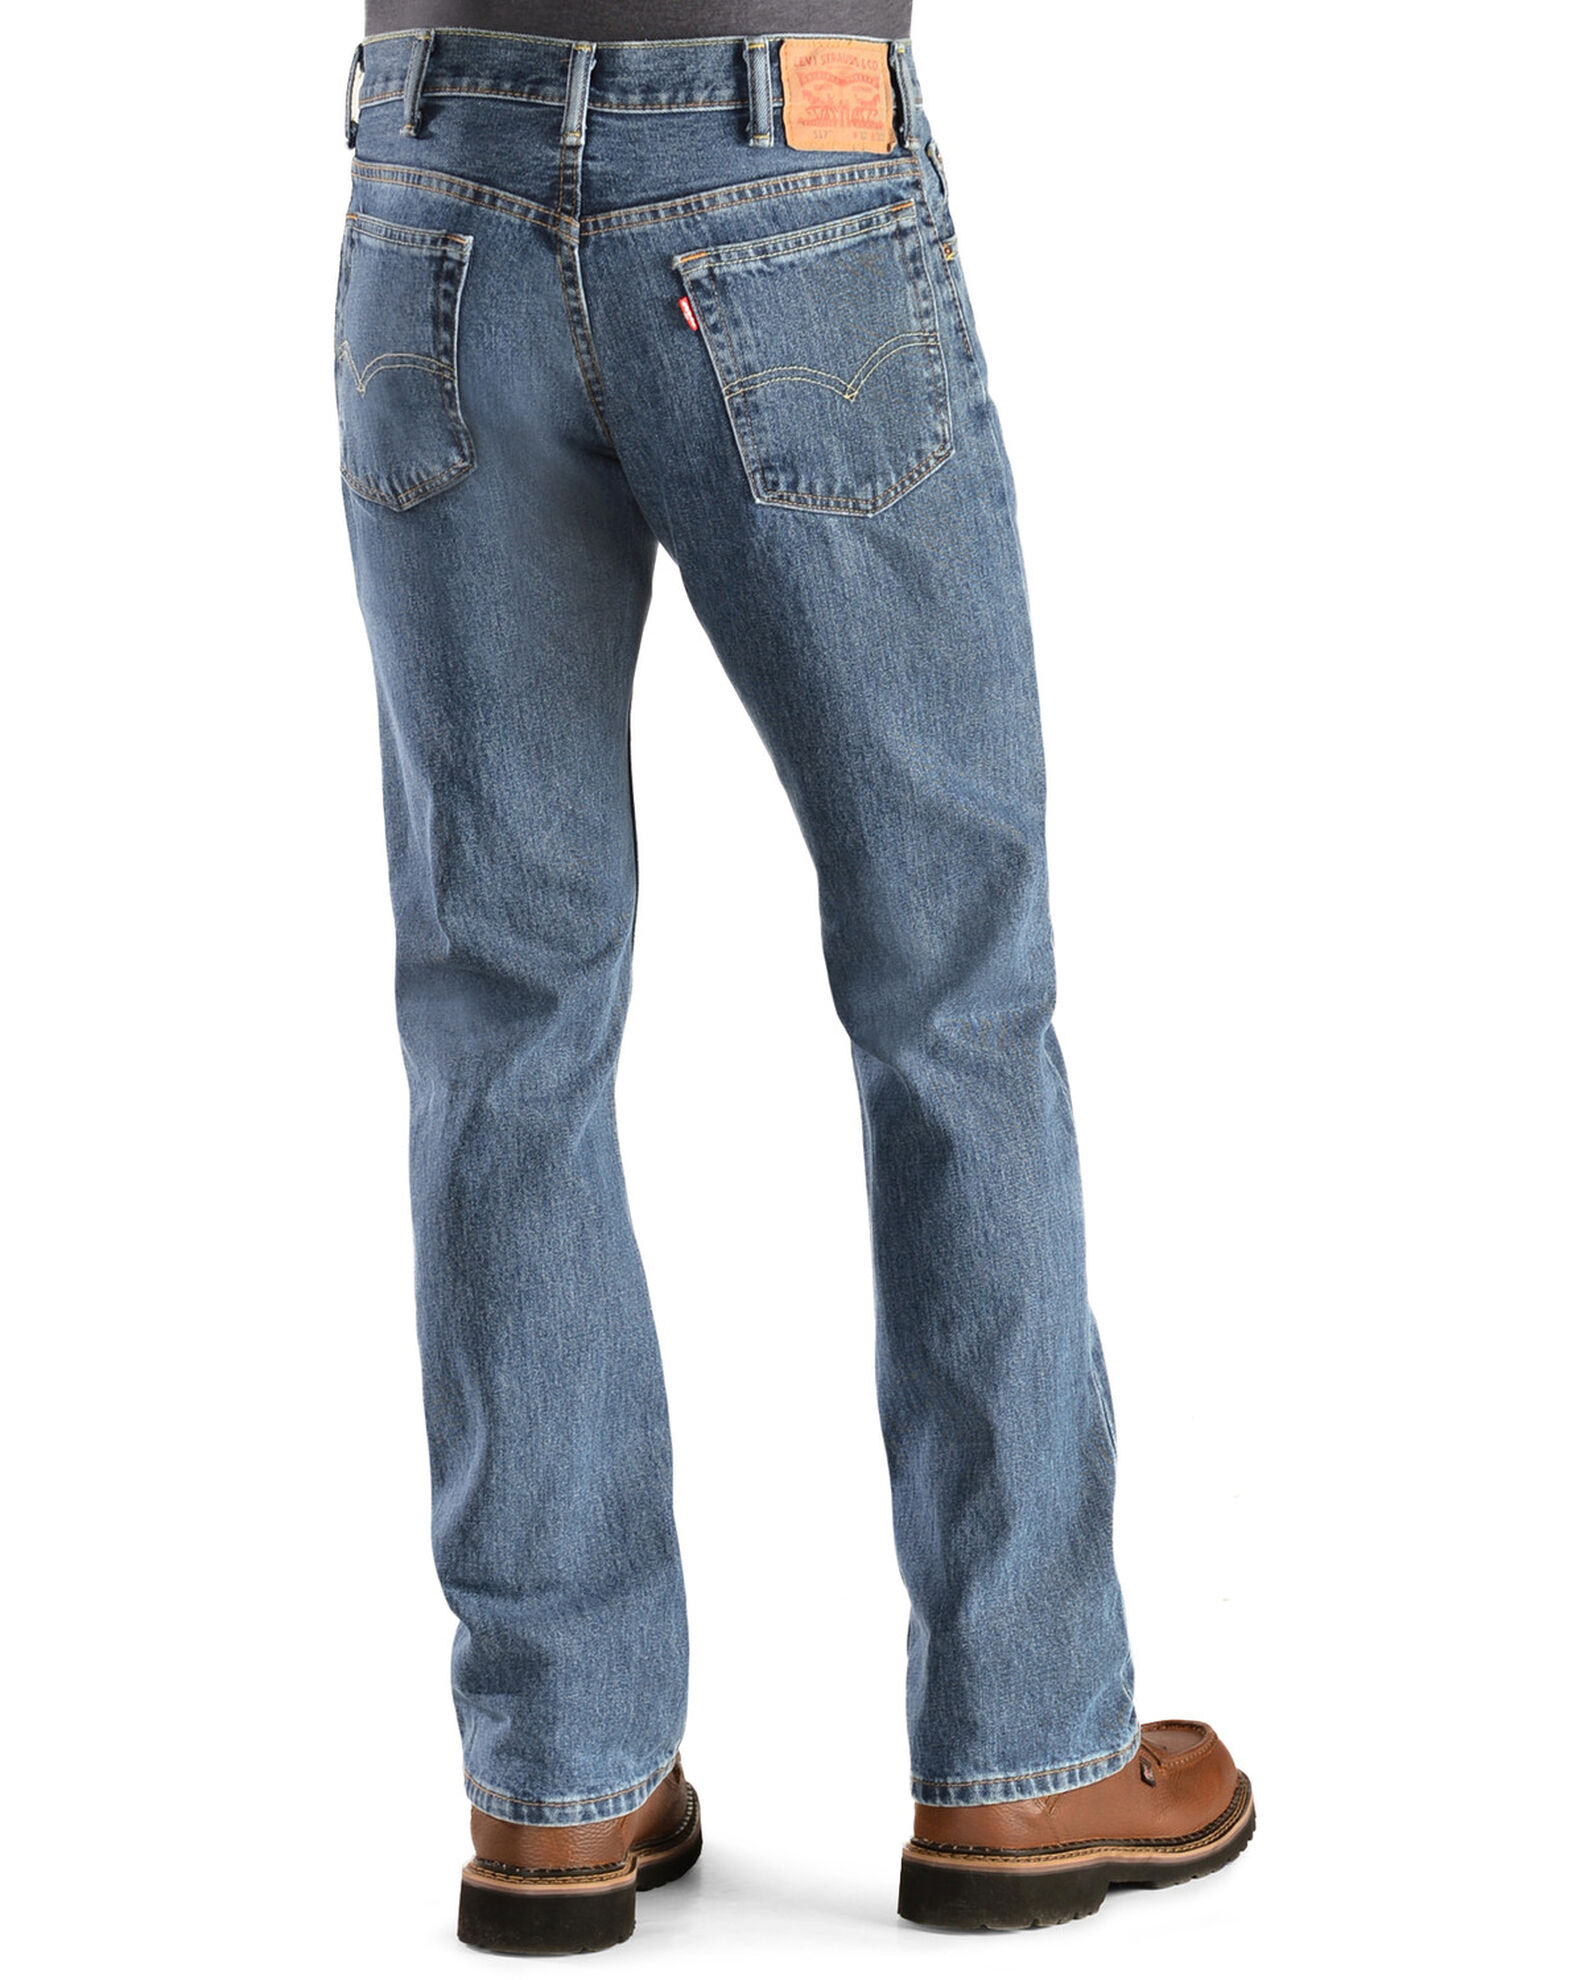 Product Name: Levi's Men's 517 Prewashed Low Slim Bootcut Jeans